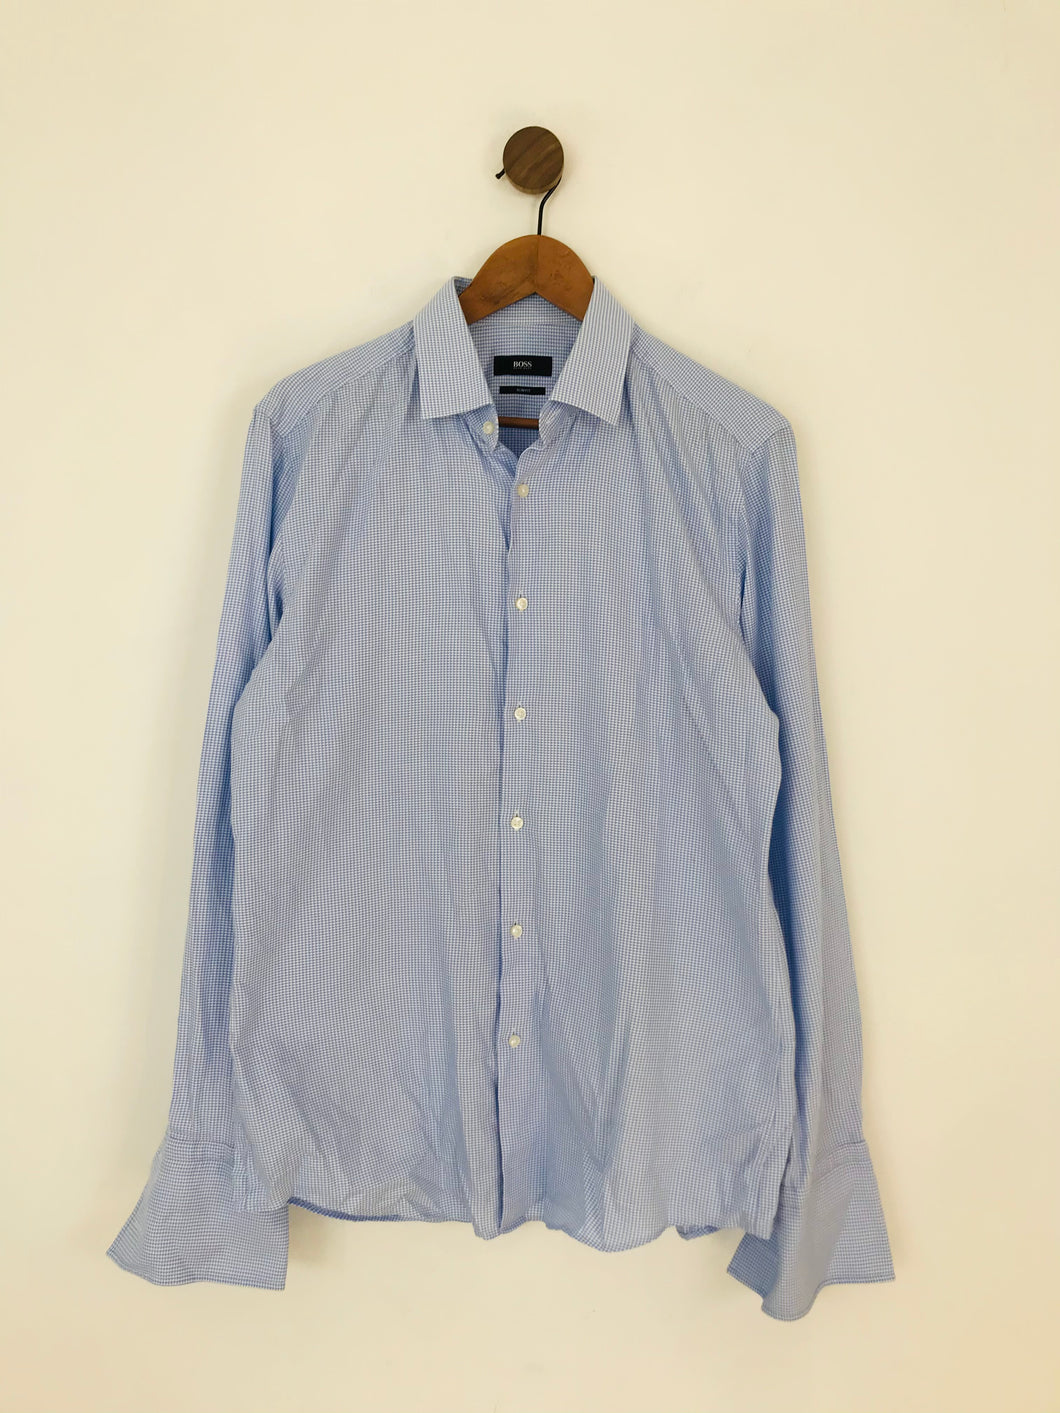 Hugo Boss Men’s Slim Fit Shirt | L 42 16.5 | Blue